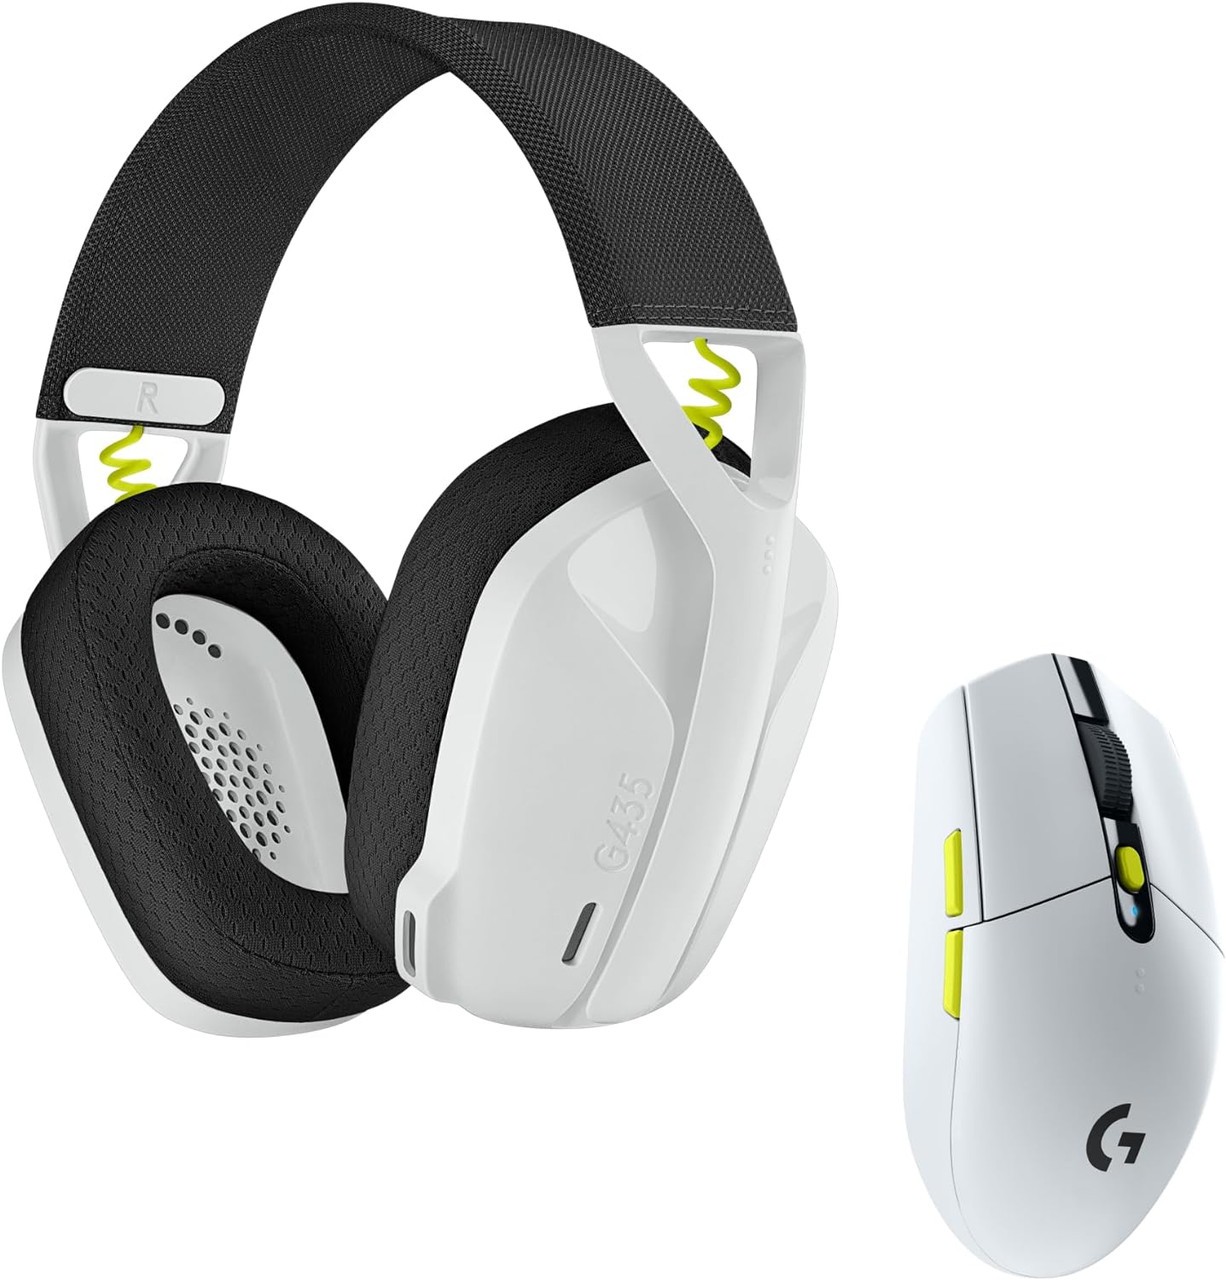 Logitech Wireless Gaming Combo (Mouse + Headset)